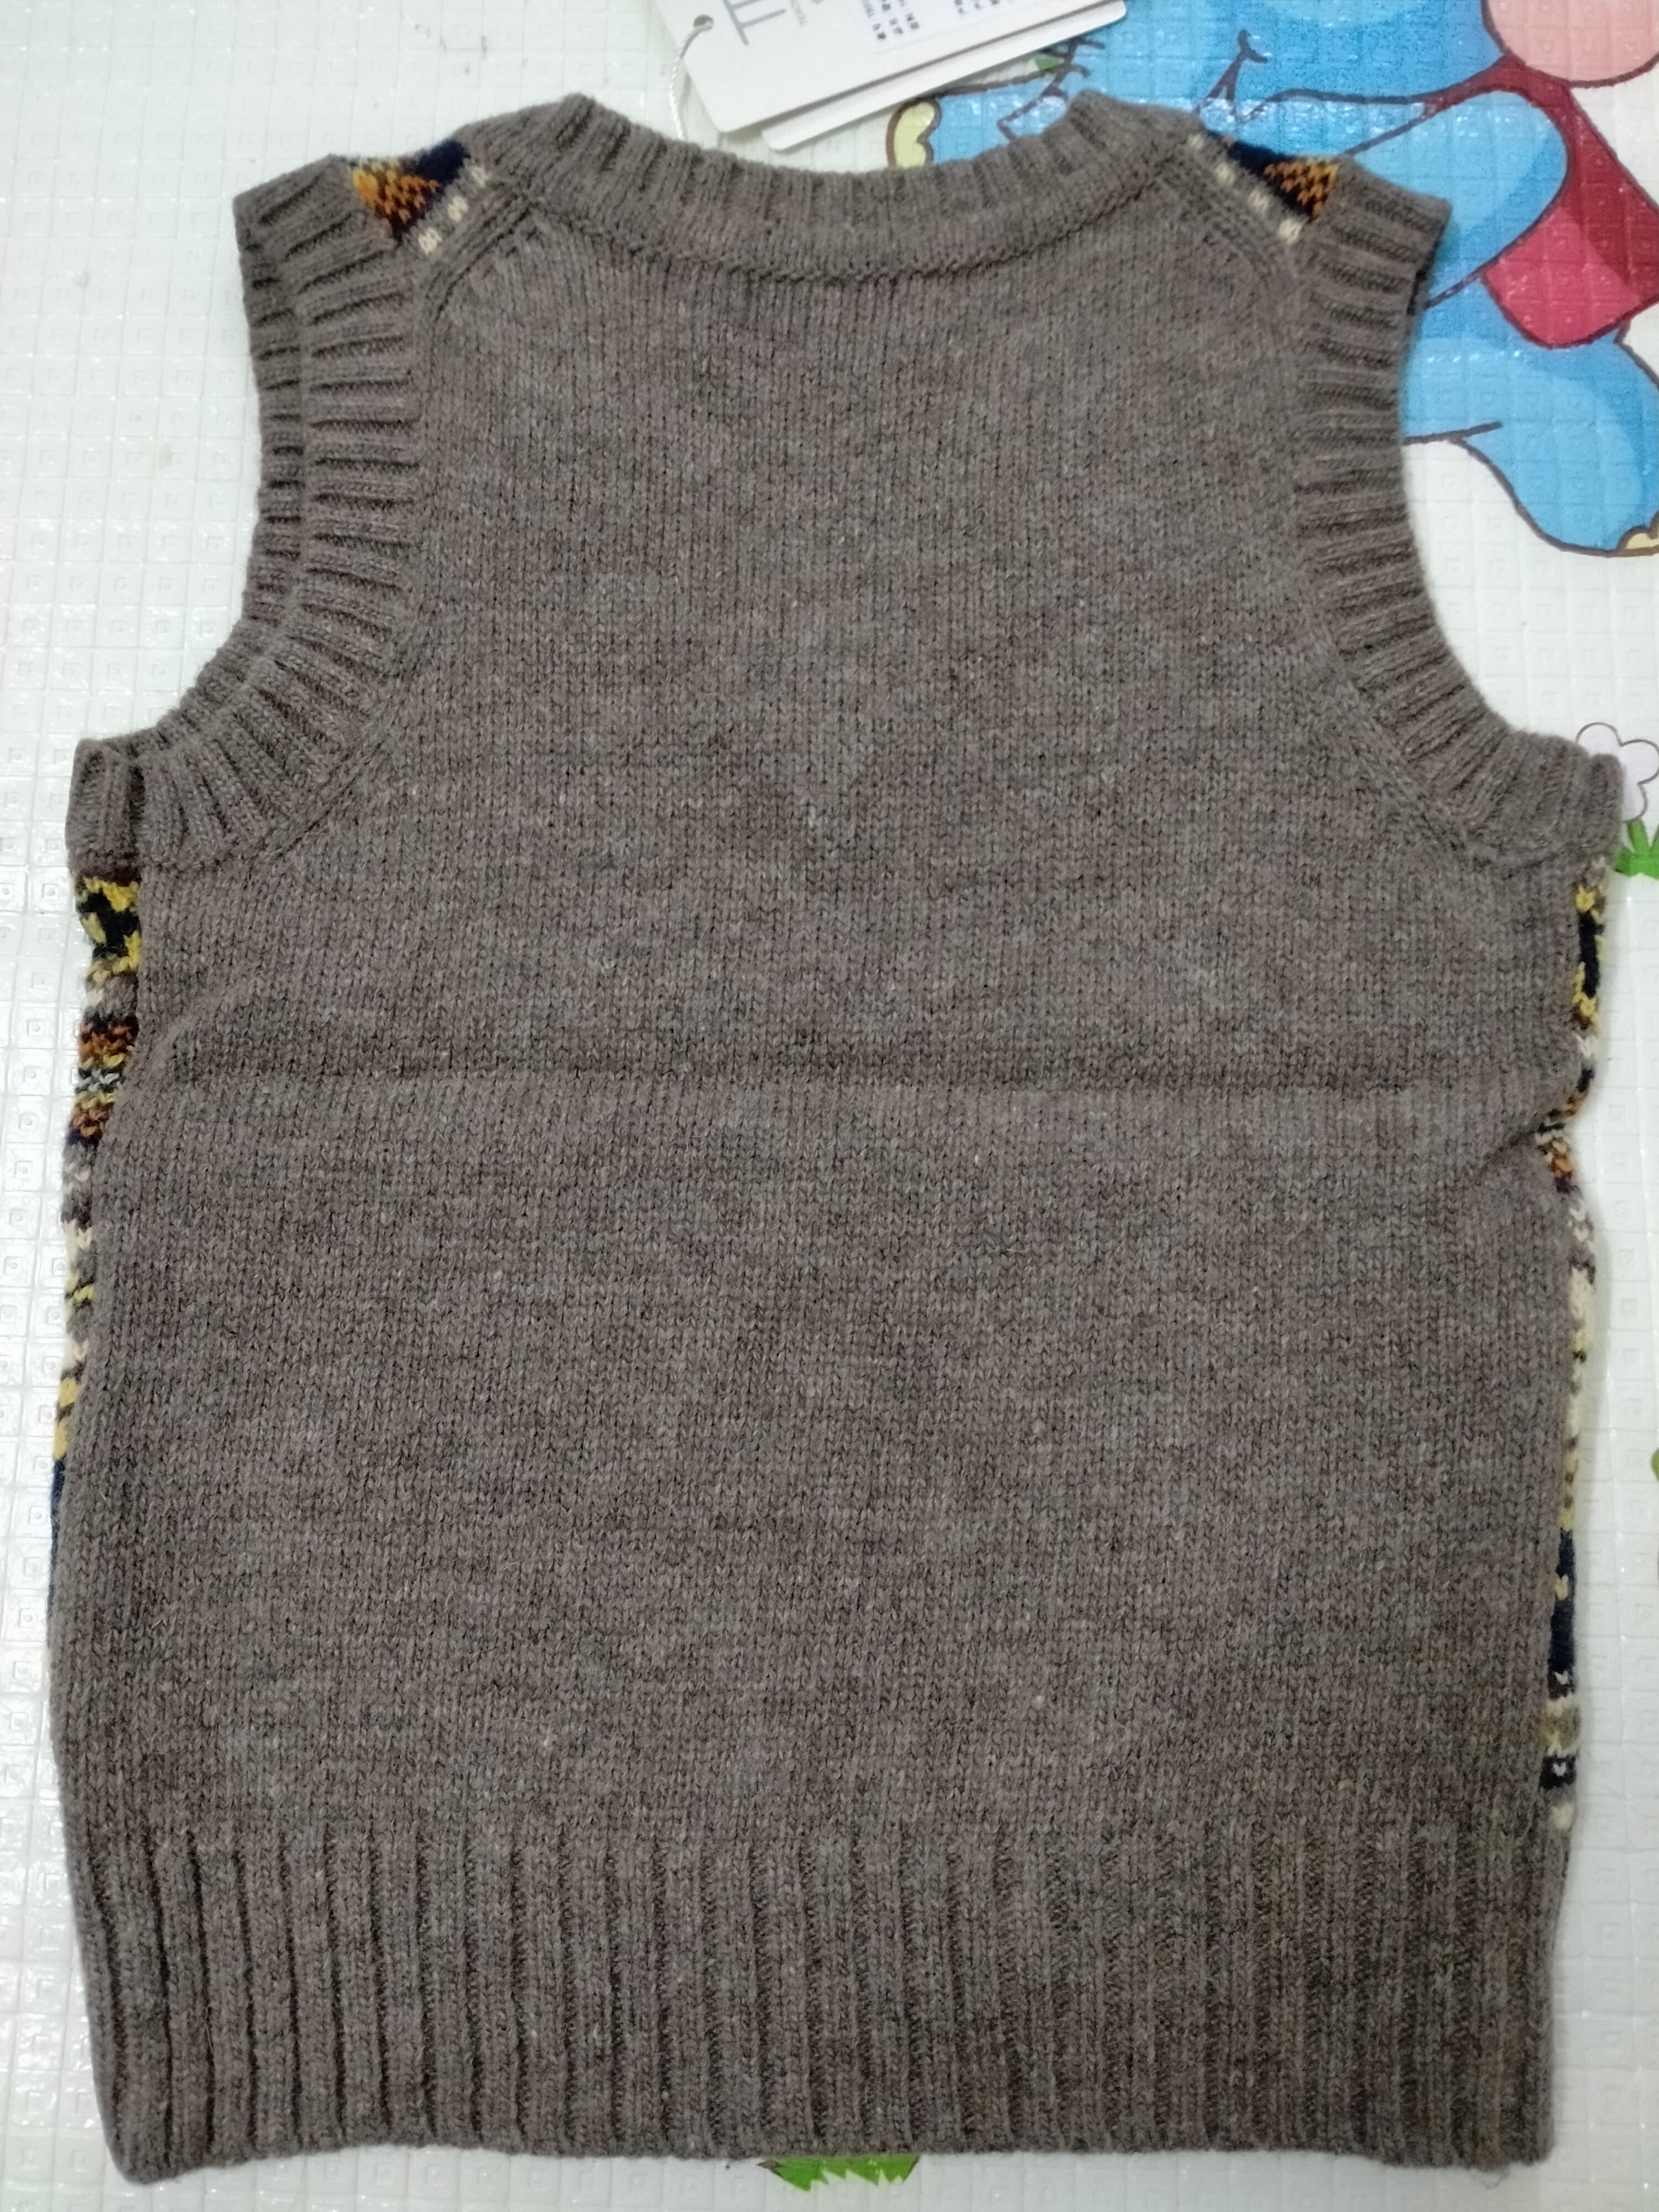 Children Top Quality Sleeveless Sweaters Kids Boys Pullover Knitting Vest Coat Boys Vest Waistcoat Sleeveless Jacket 12Y 4C0423